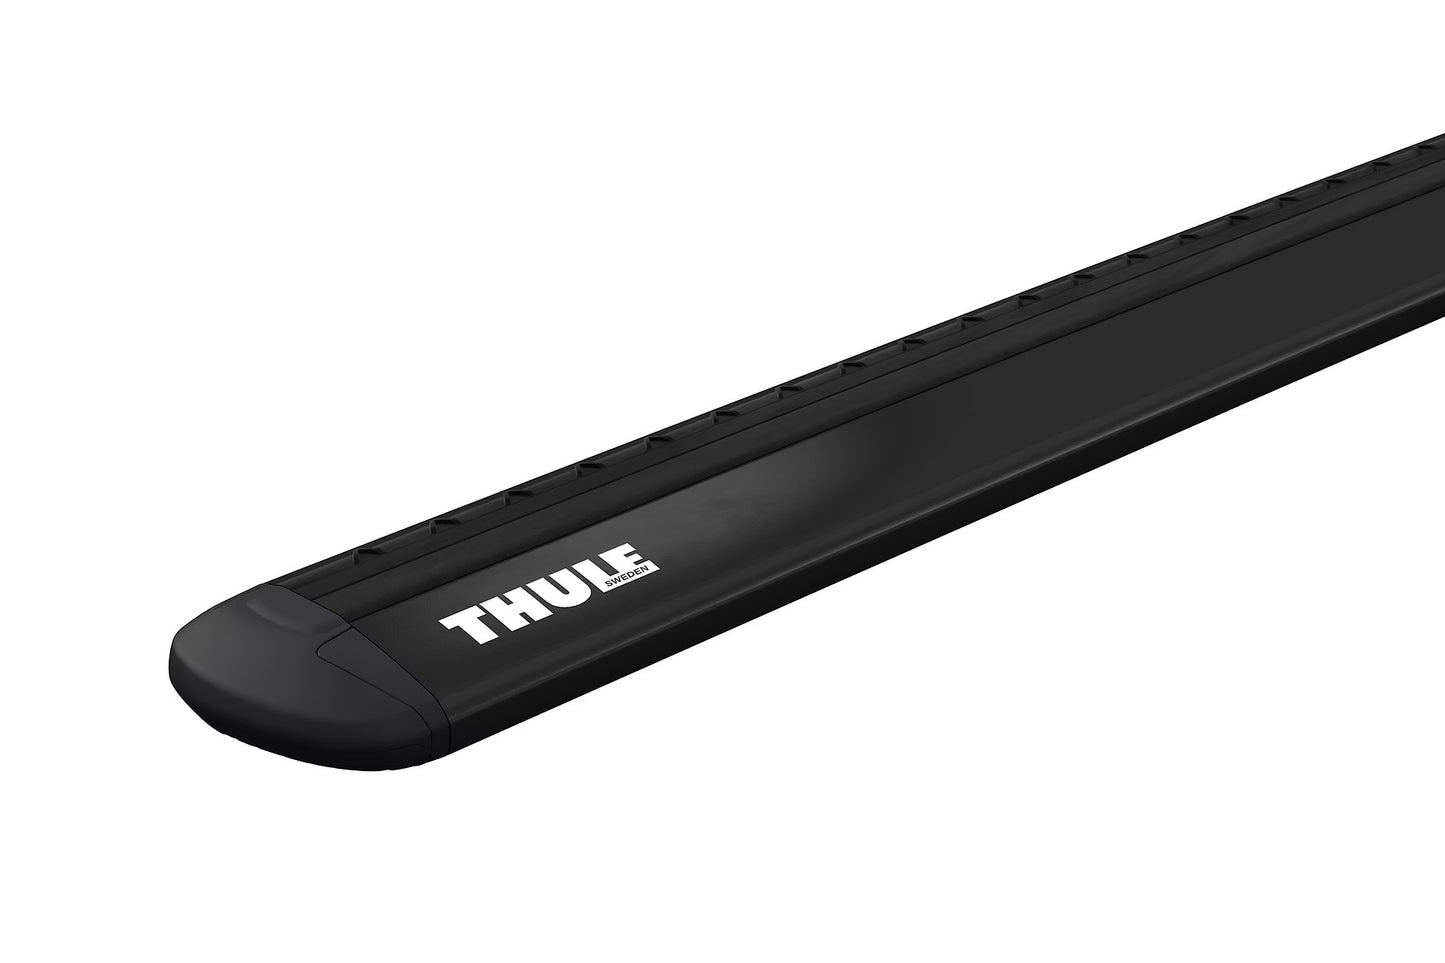 Thule Wingbar Evo 2-pack